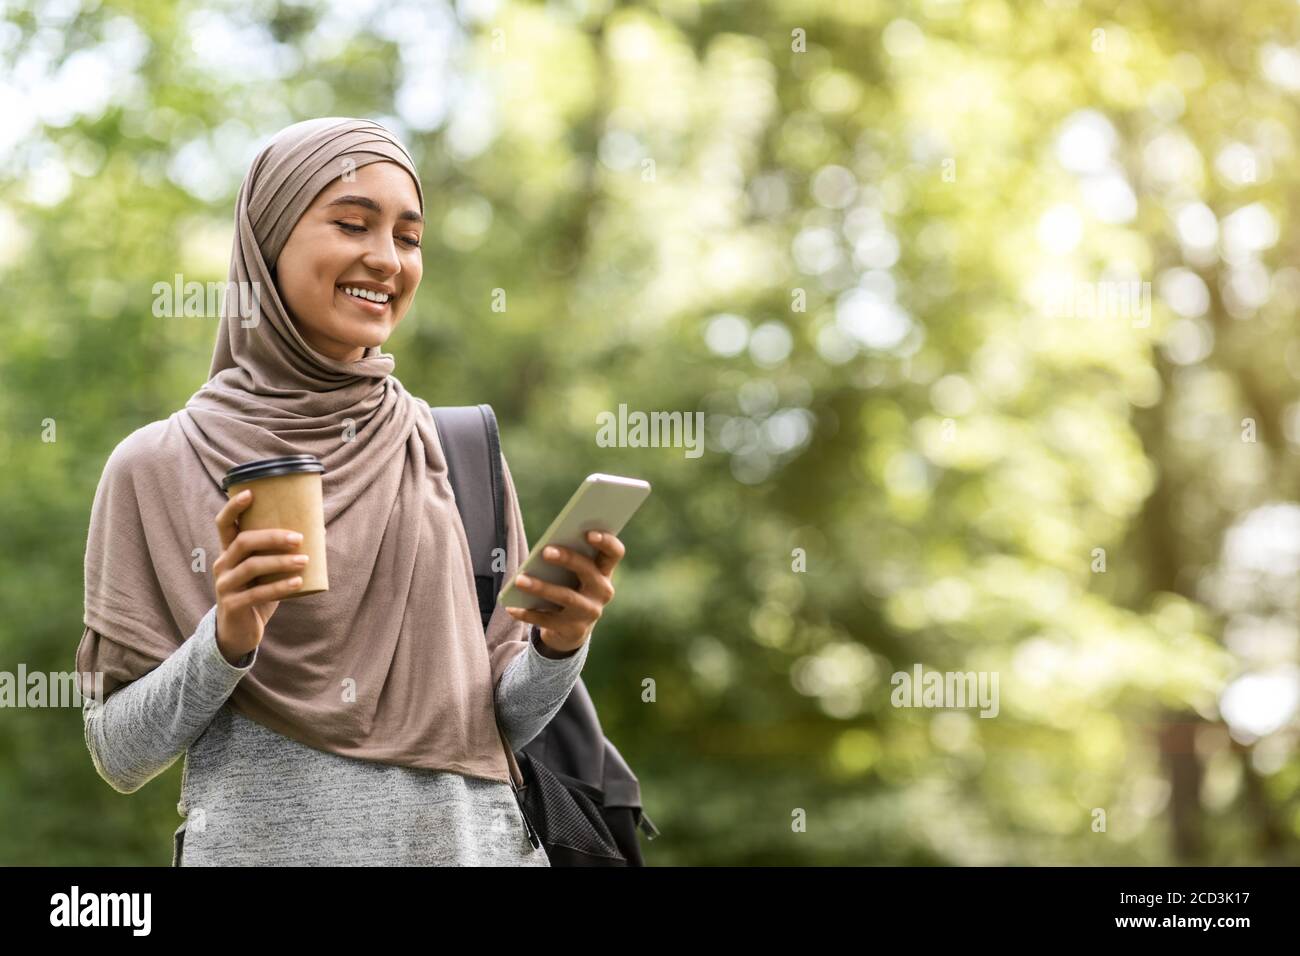 Muslim girl in hijab drinking coffee and using phone Stock Photo